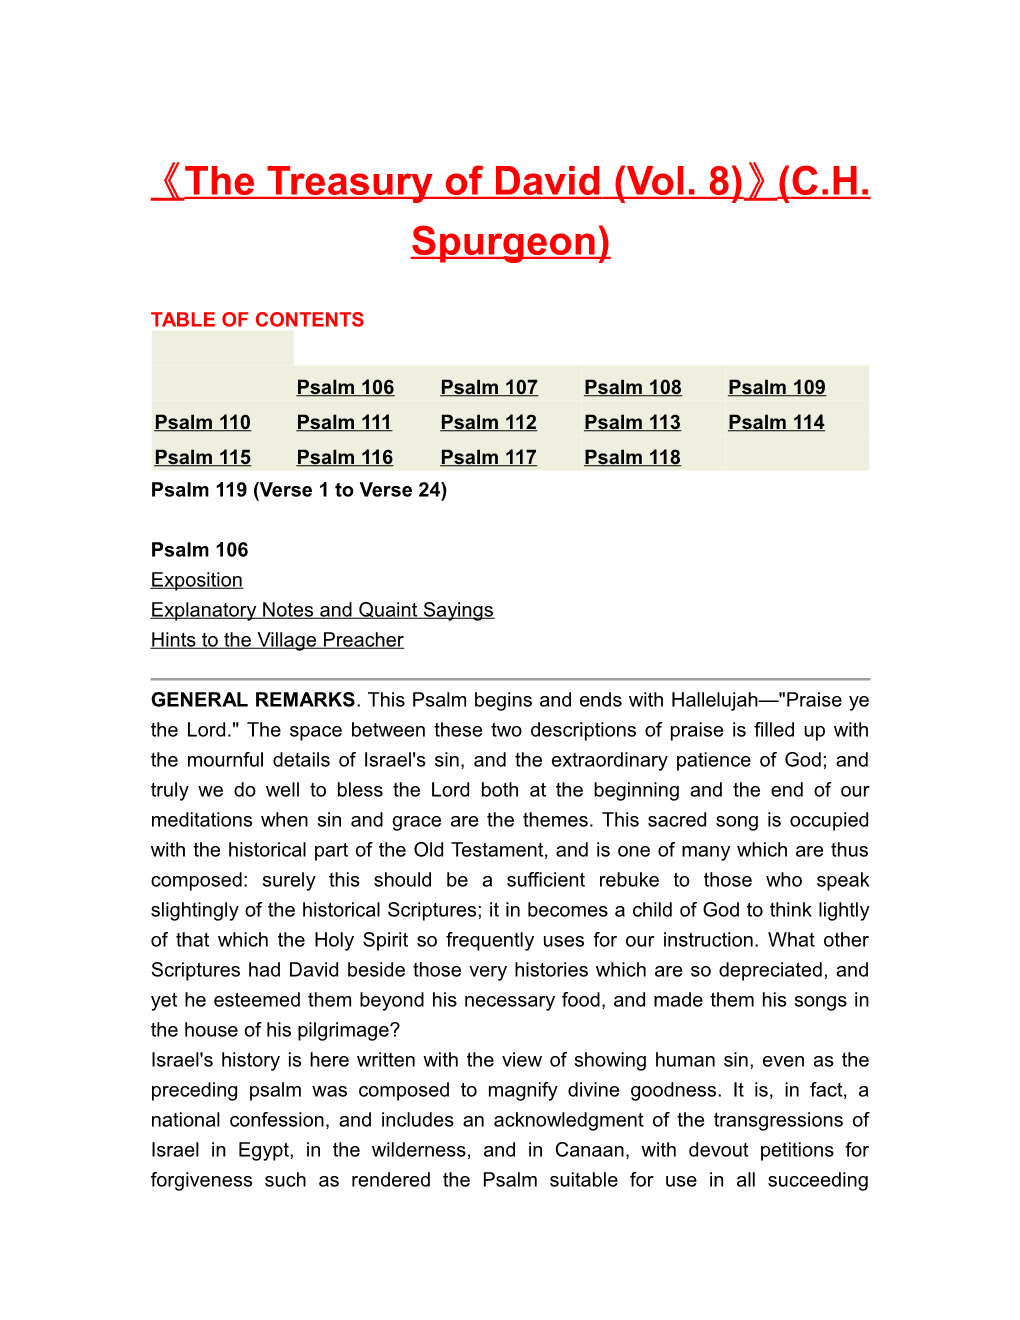 The Treasury of David (Vol. 8) (C.H. Spurgeon)